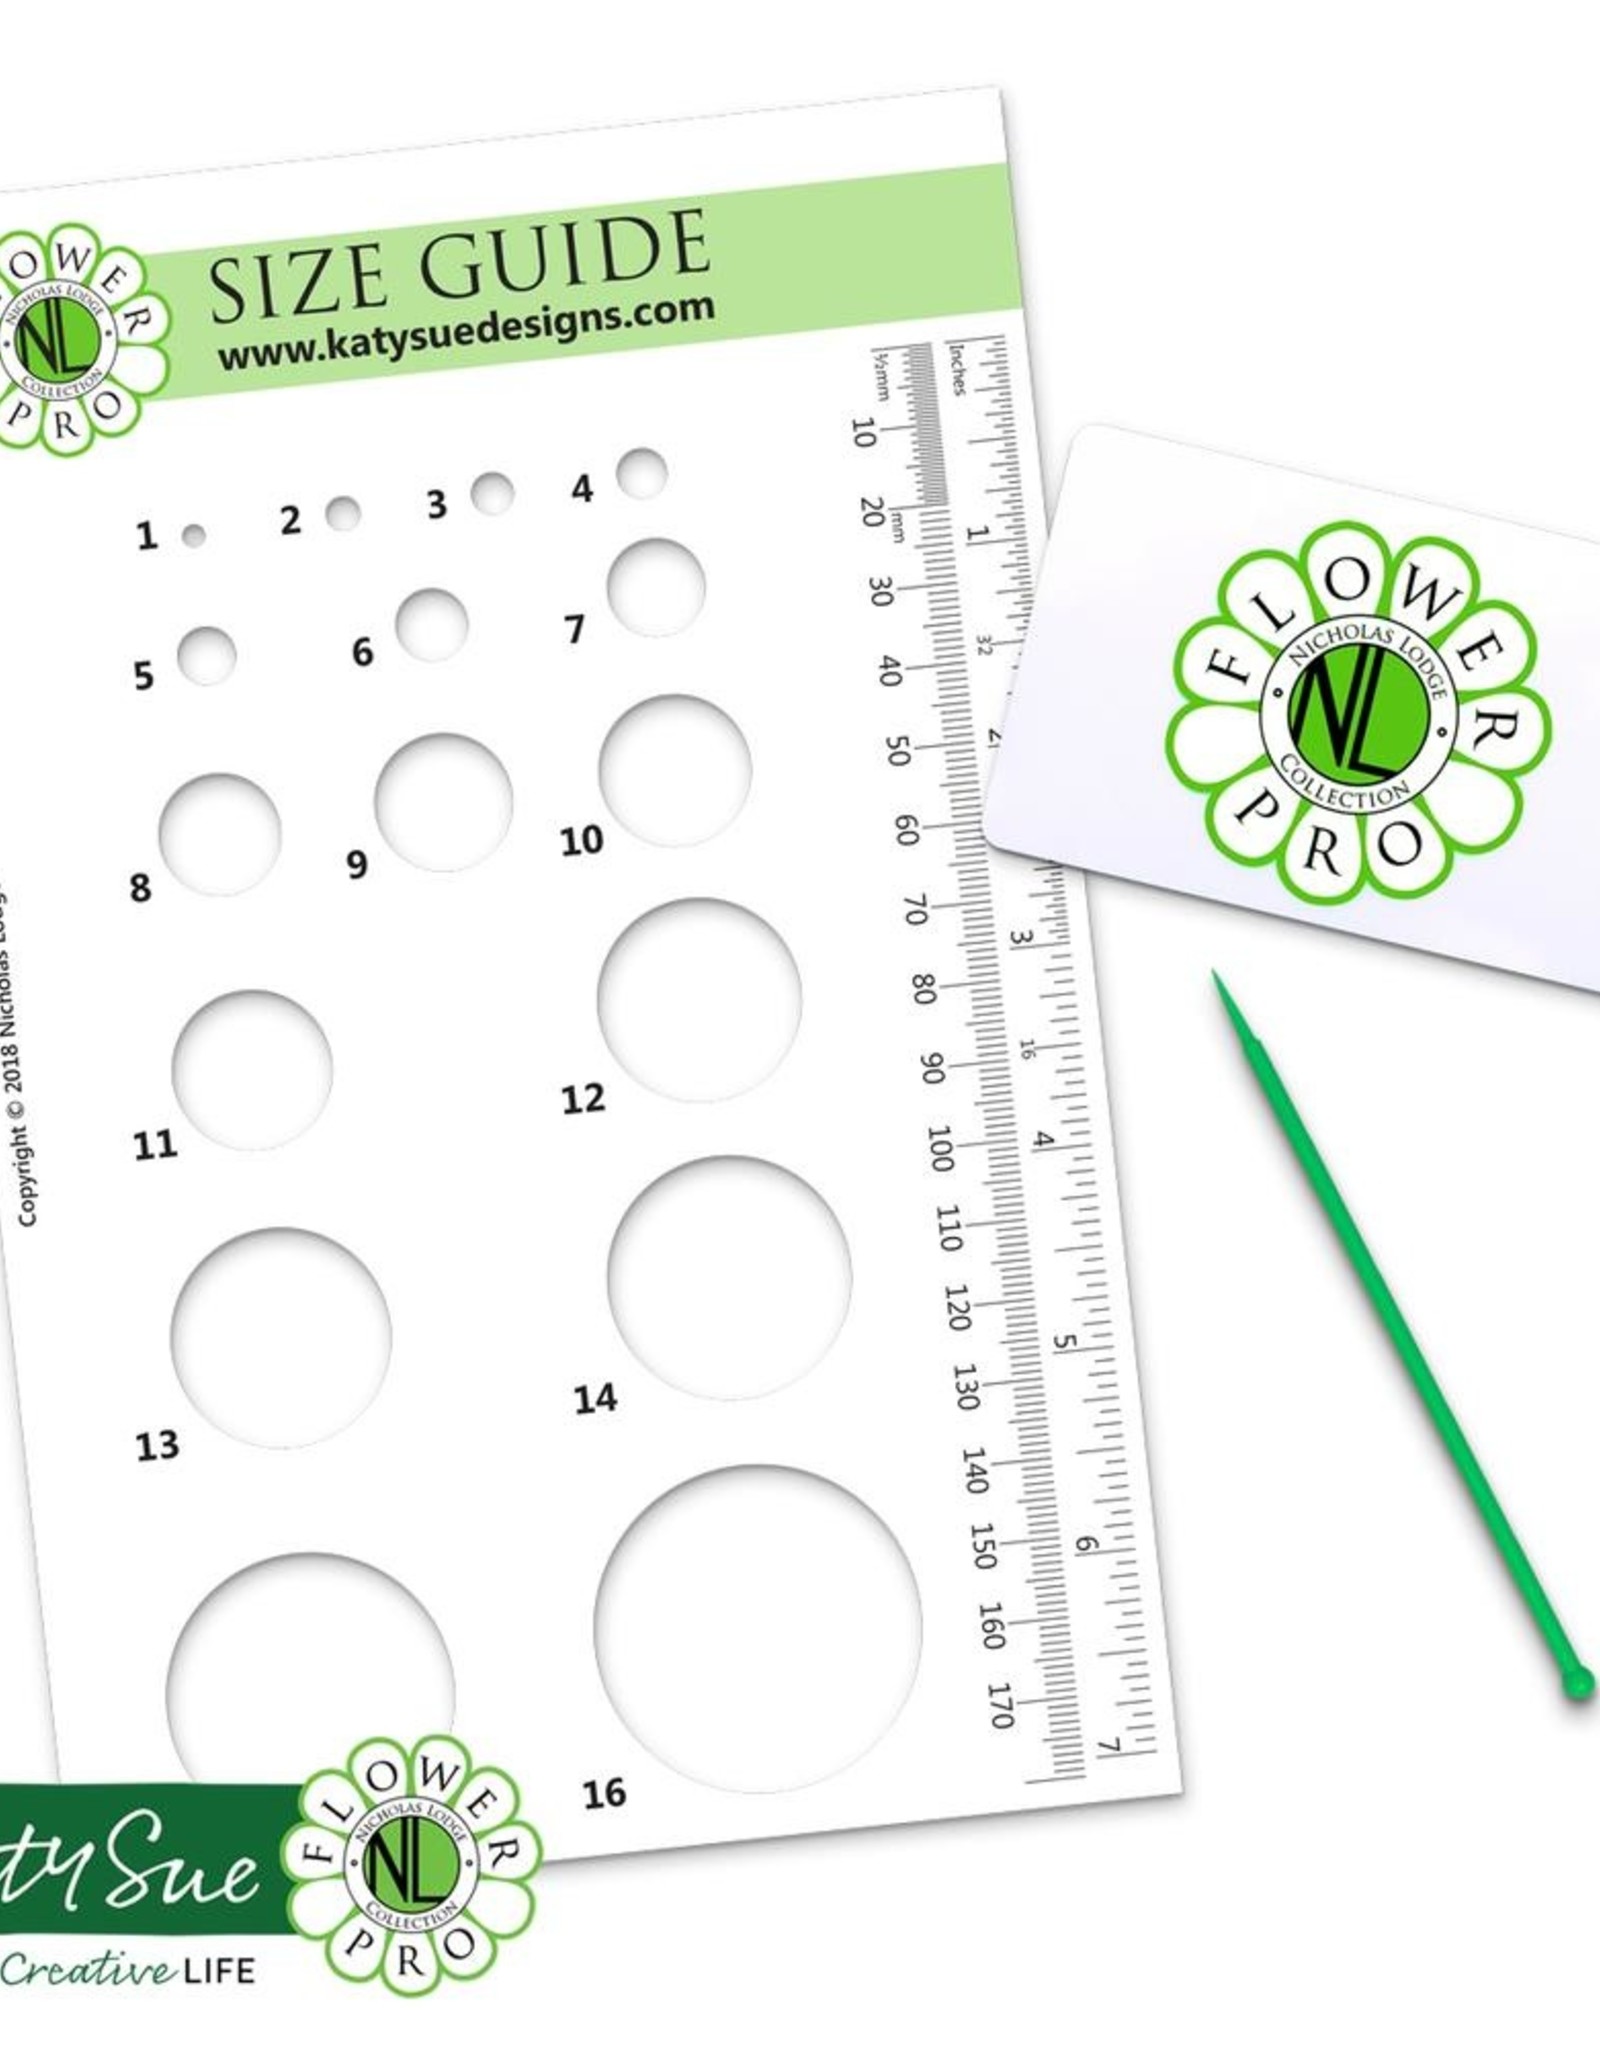 Katy Sue Designs Katy Sue Mould Flower Pro Size Guide / Companion Tool / Flex